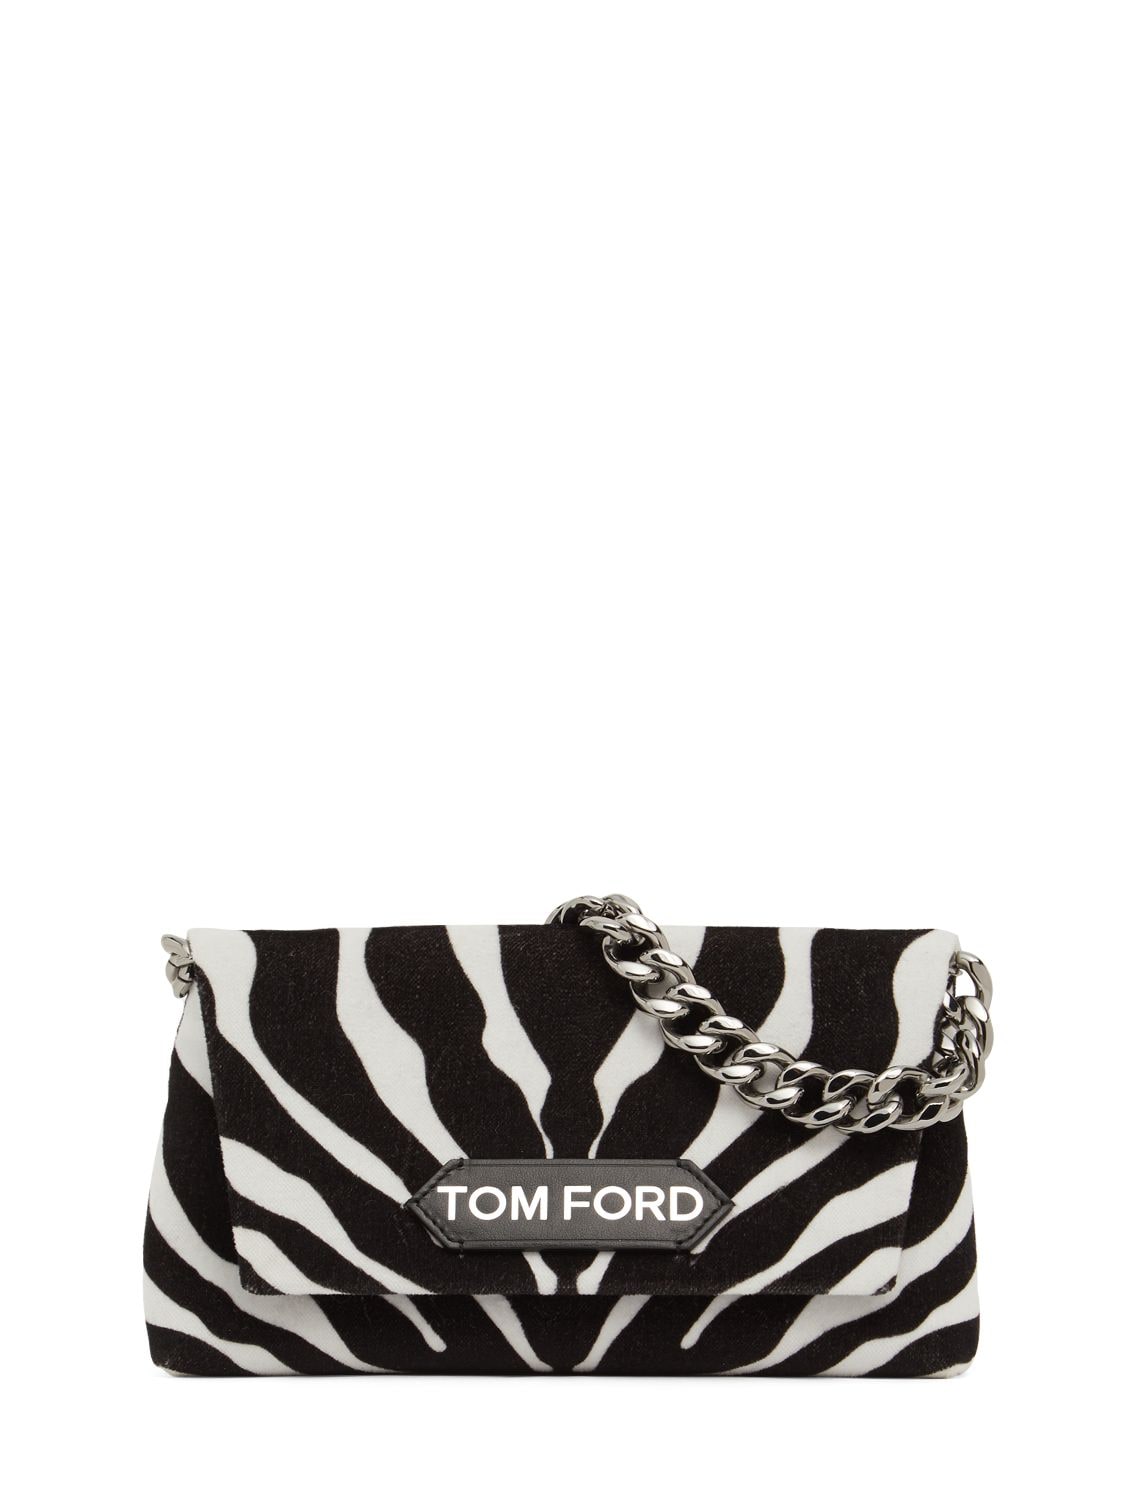 Tom Ford Zebra Print Velvet Shoulder Bag W/ Chain In Black,white